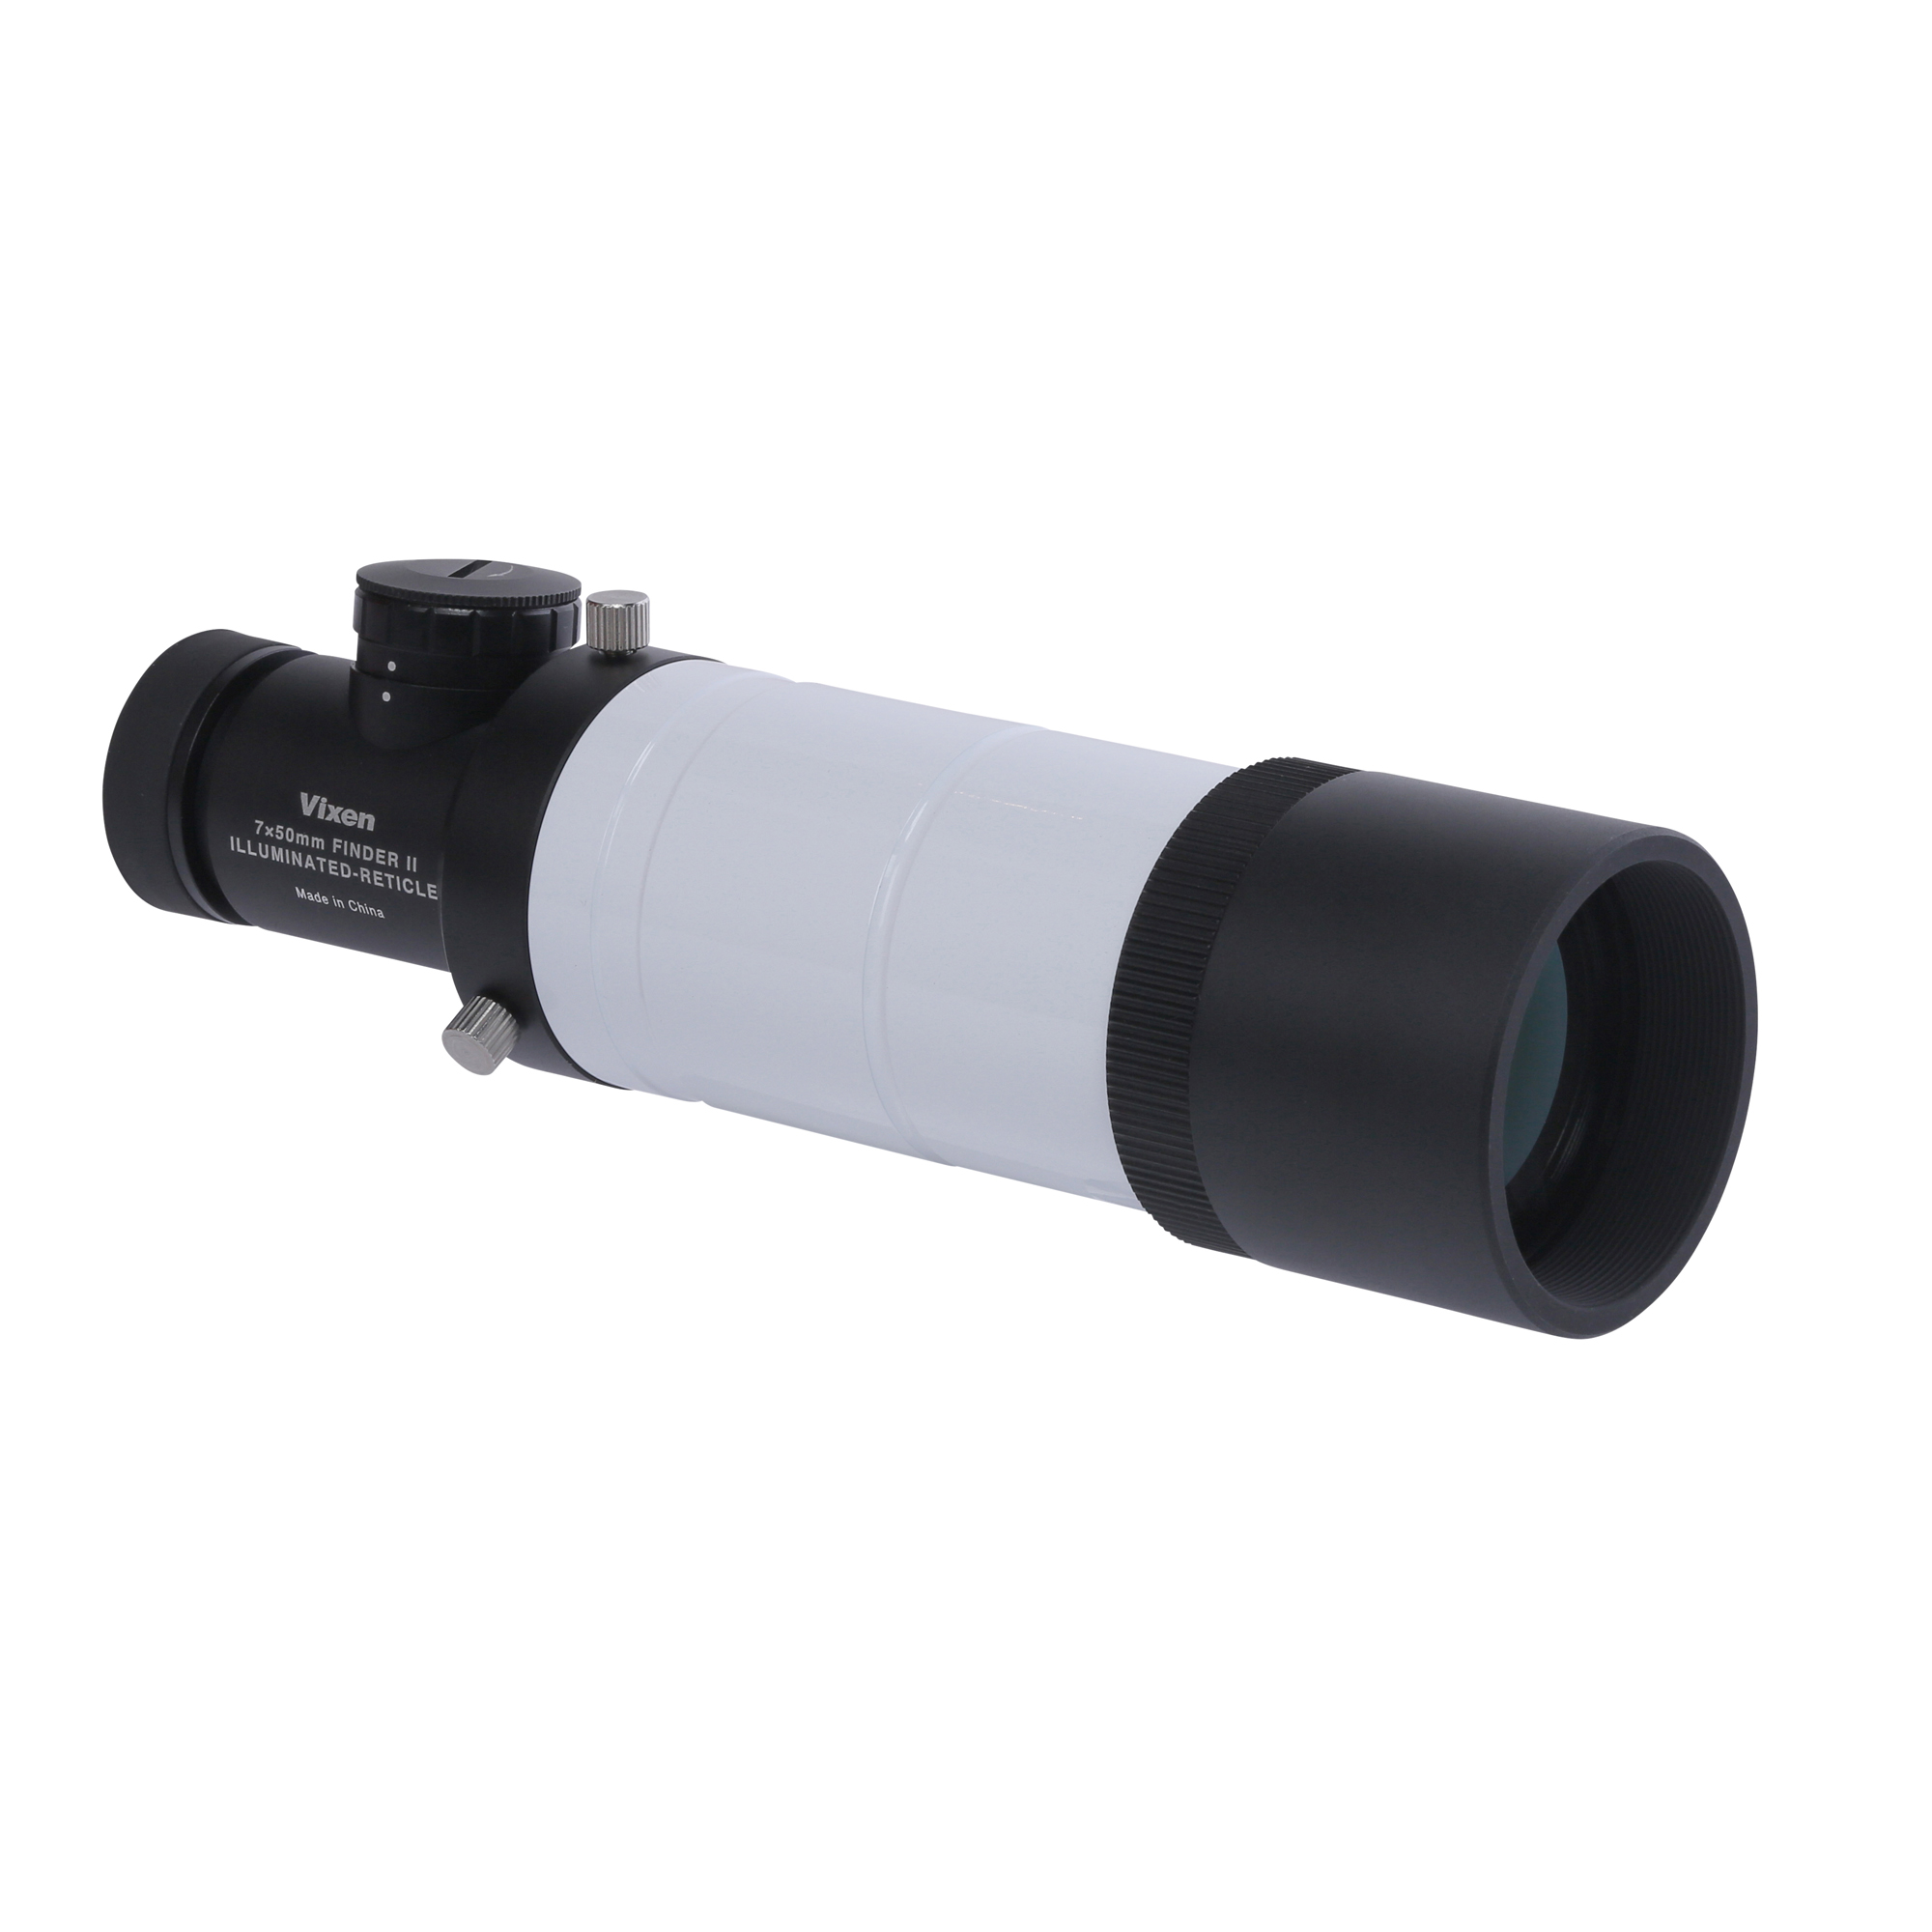 Vixen finder scope 7x50 with crosshairs and illumination